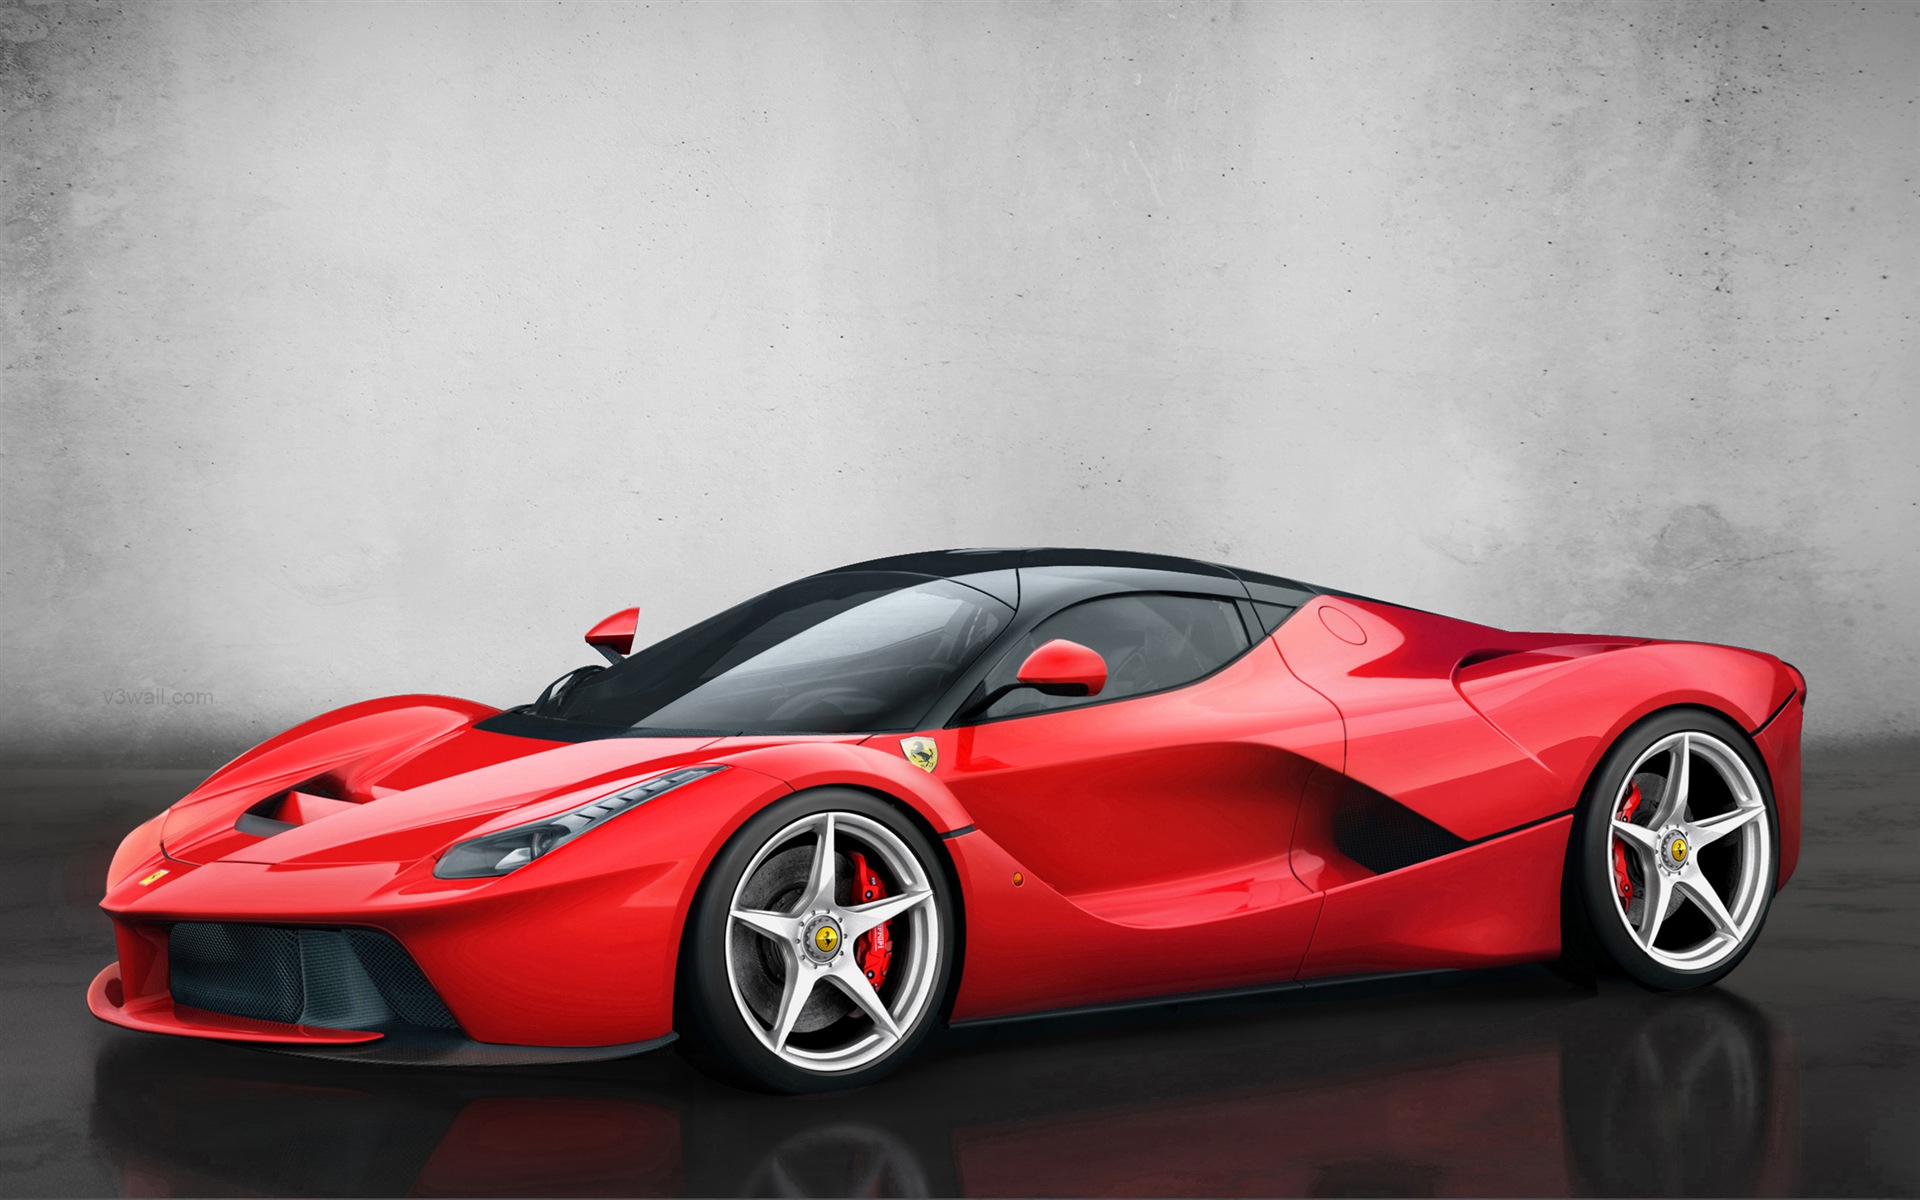 2013 Ferrari LaFerrari 法拉利LaFerrari红色超级跑车高清壁纸7 - 1920x1200